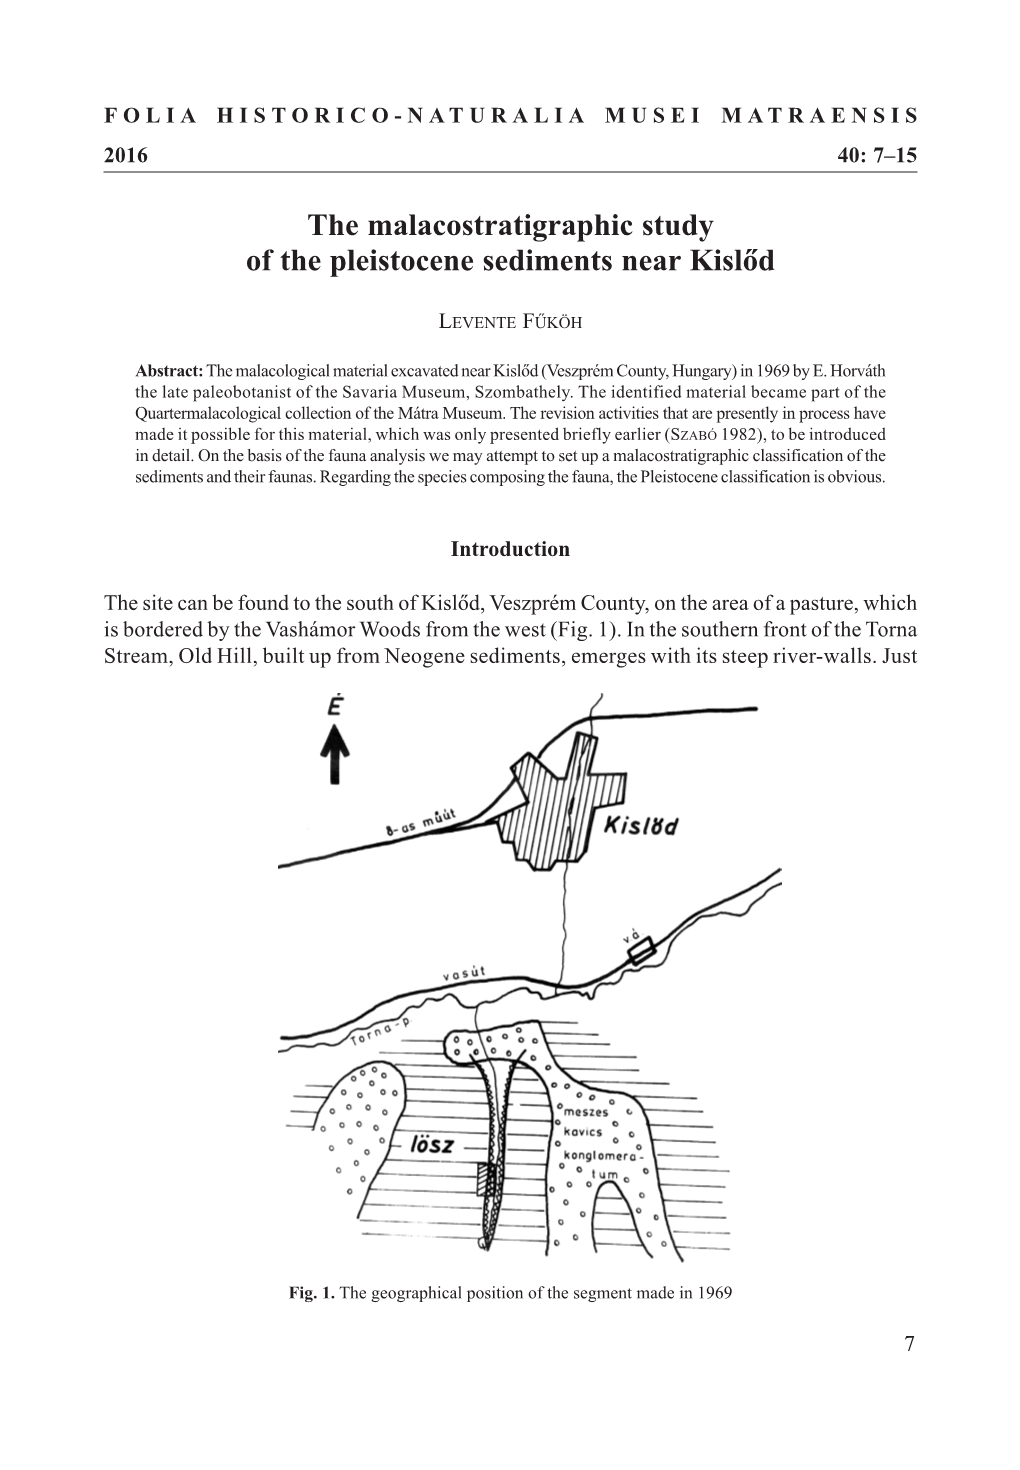 The Malacostratigraphic Study of the Pleistocene Sediments Near Kislõd